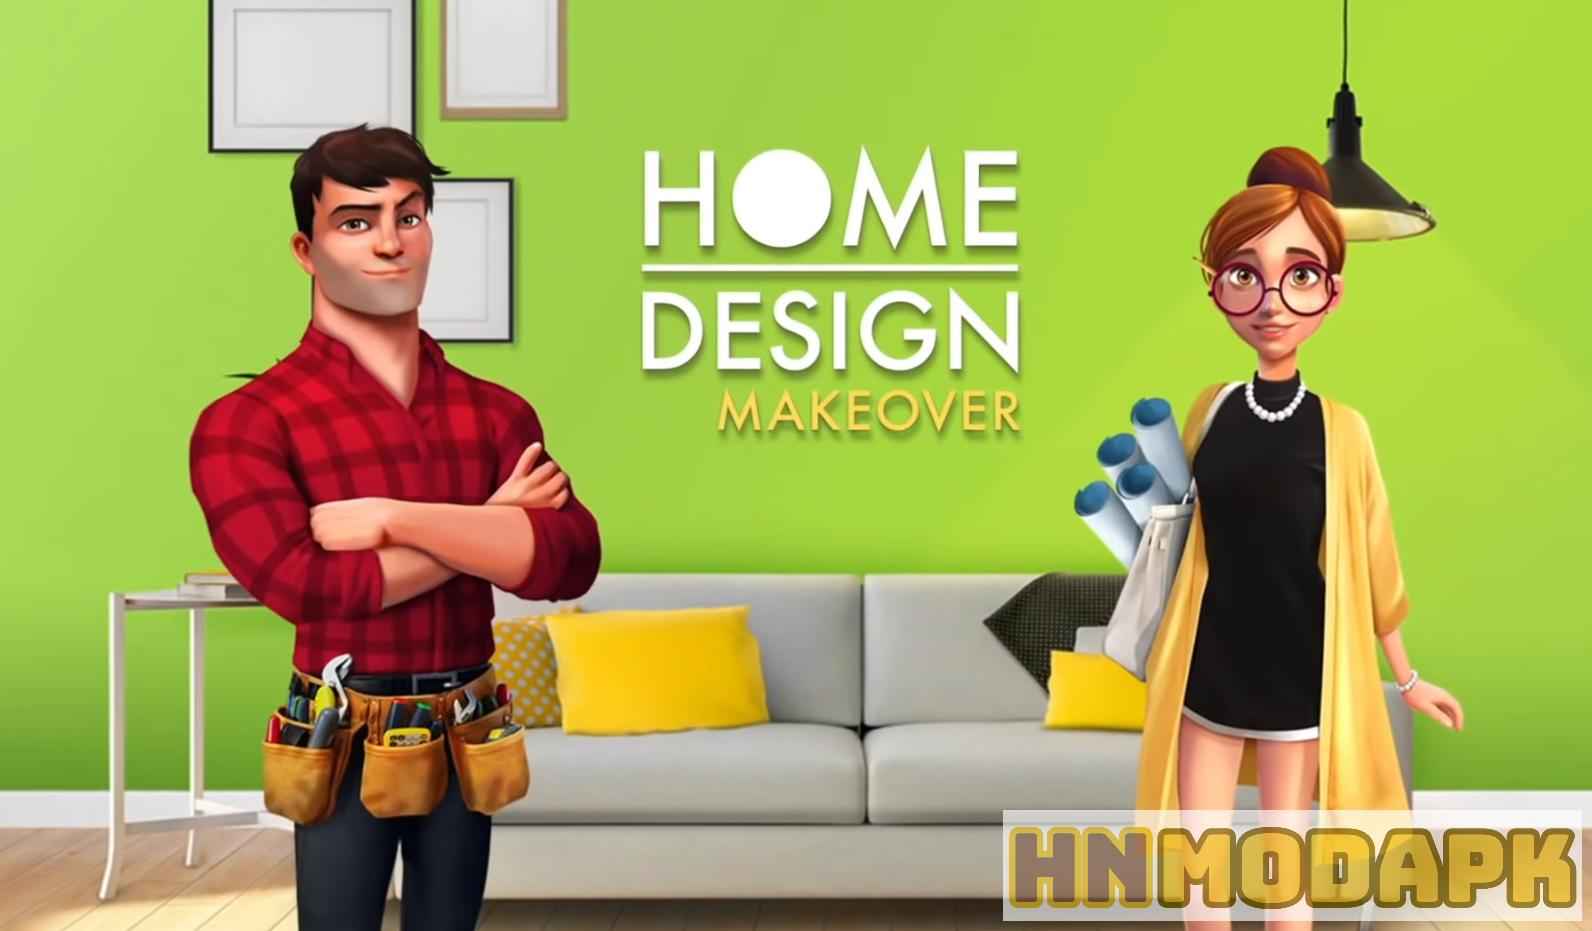 Home Design Makeover MOD (Pro Menu, Infinite Money, Full Gold, Lots of Energy) APK 5.9.5g